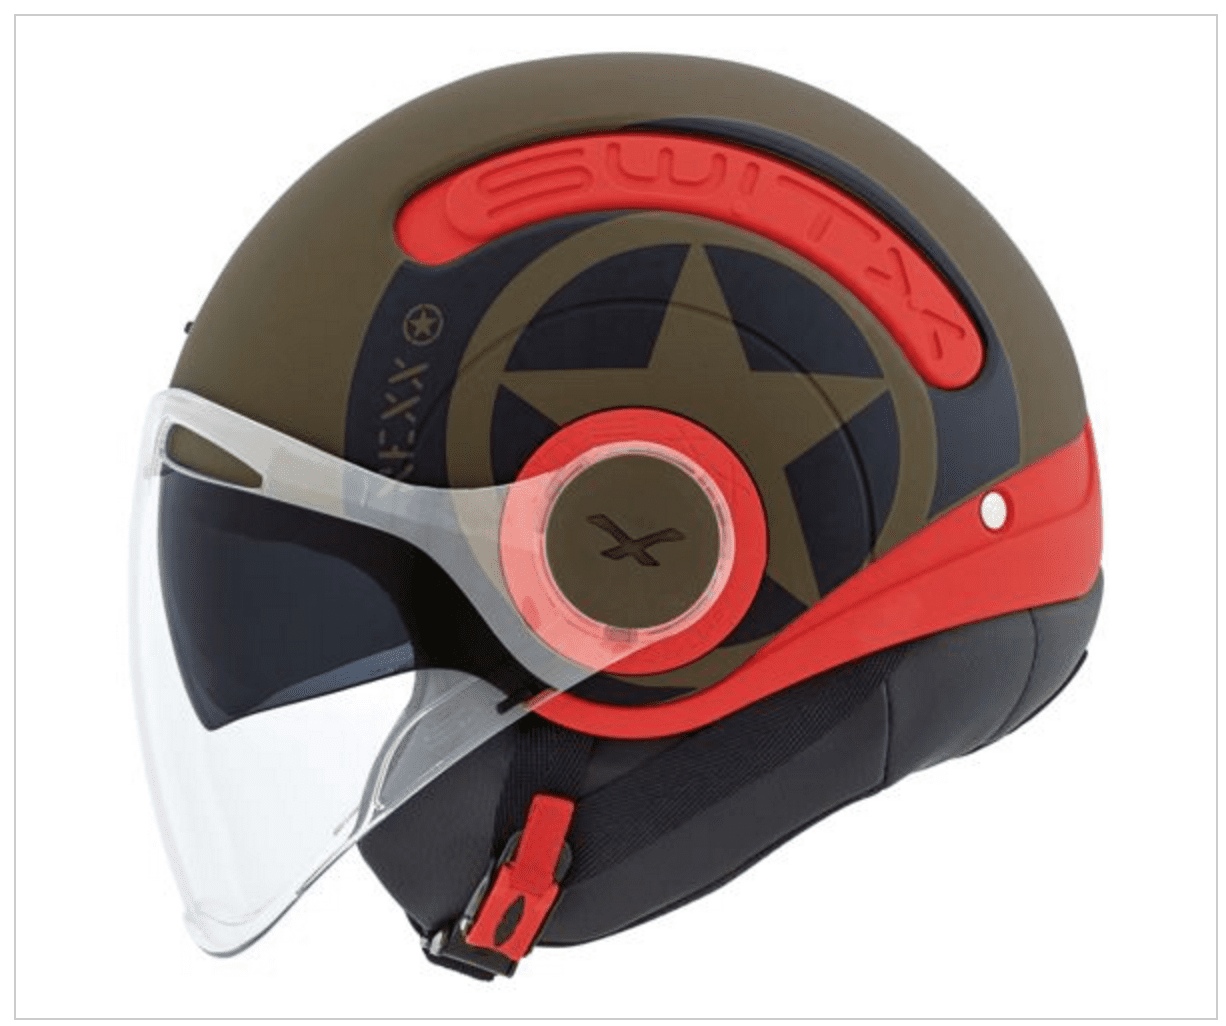 The Nexx SX10 Hero Helmet